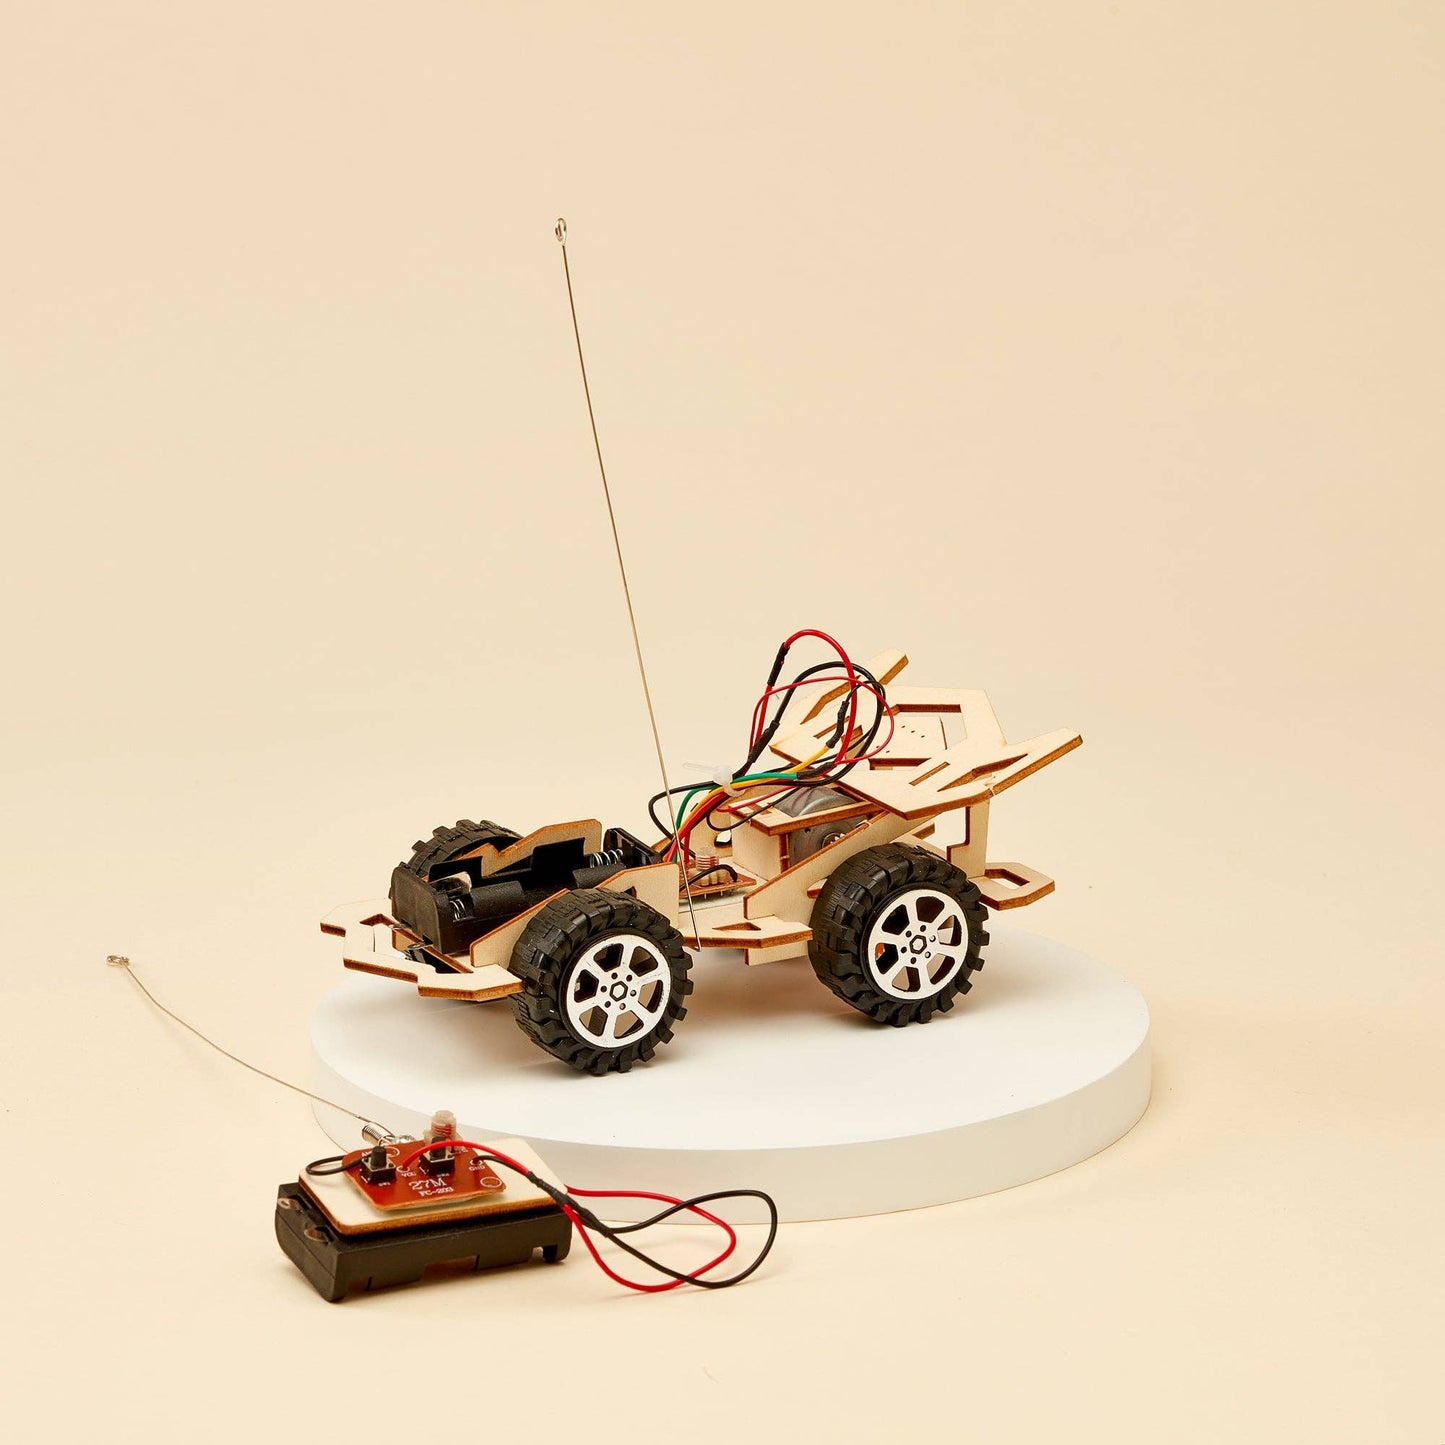 CreateKit - Radio Controlled Car, Educational STEM Toy